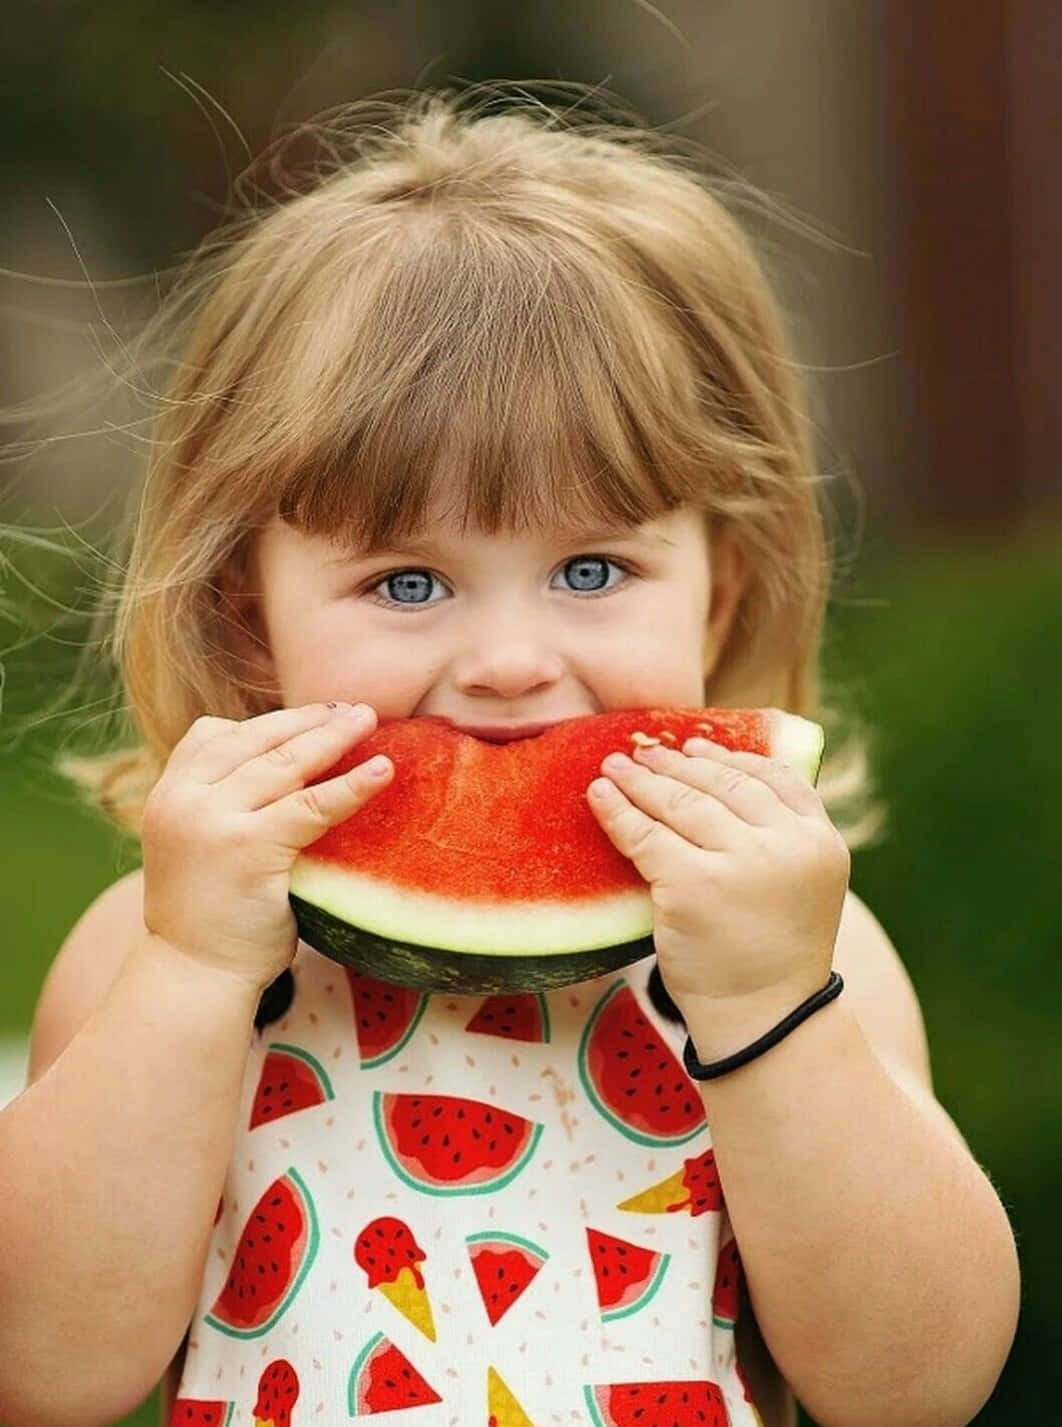 Enjoying a taste of summer with a refreshing, juicy watermelon!